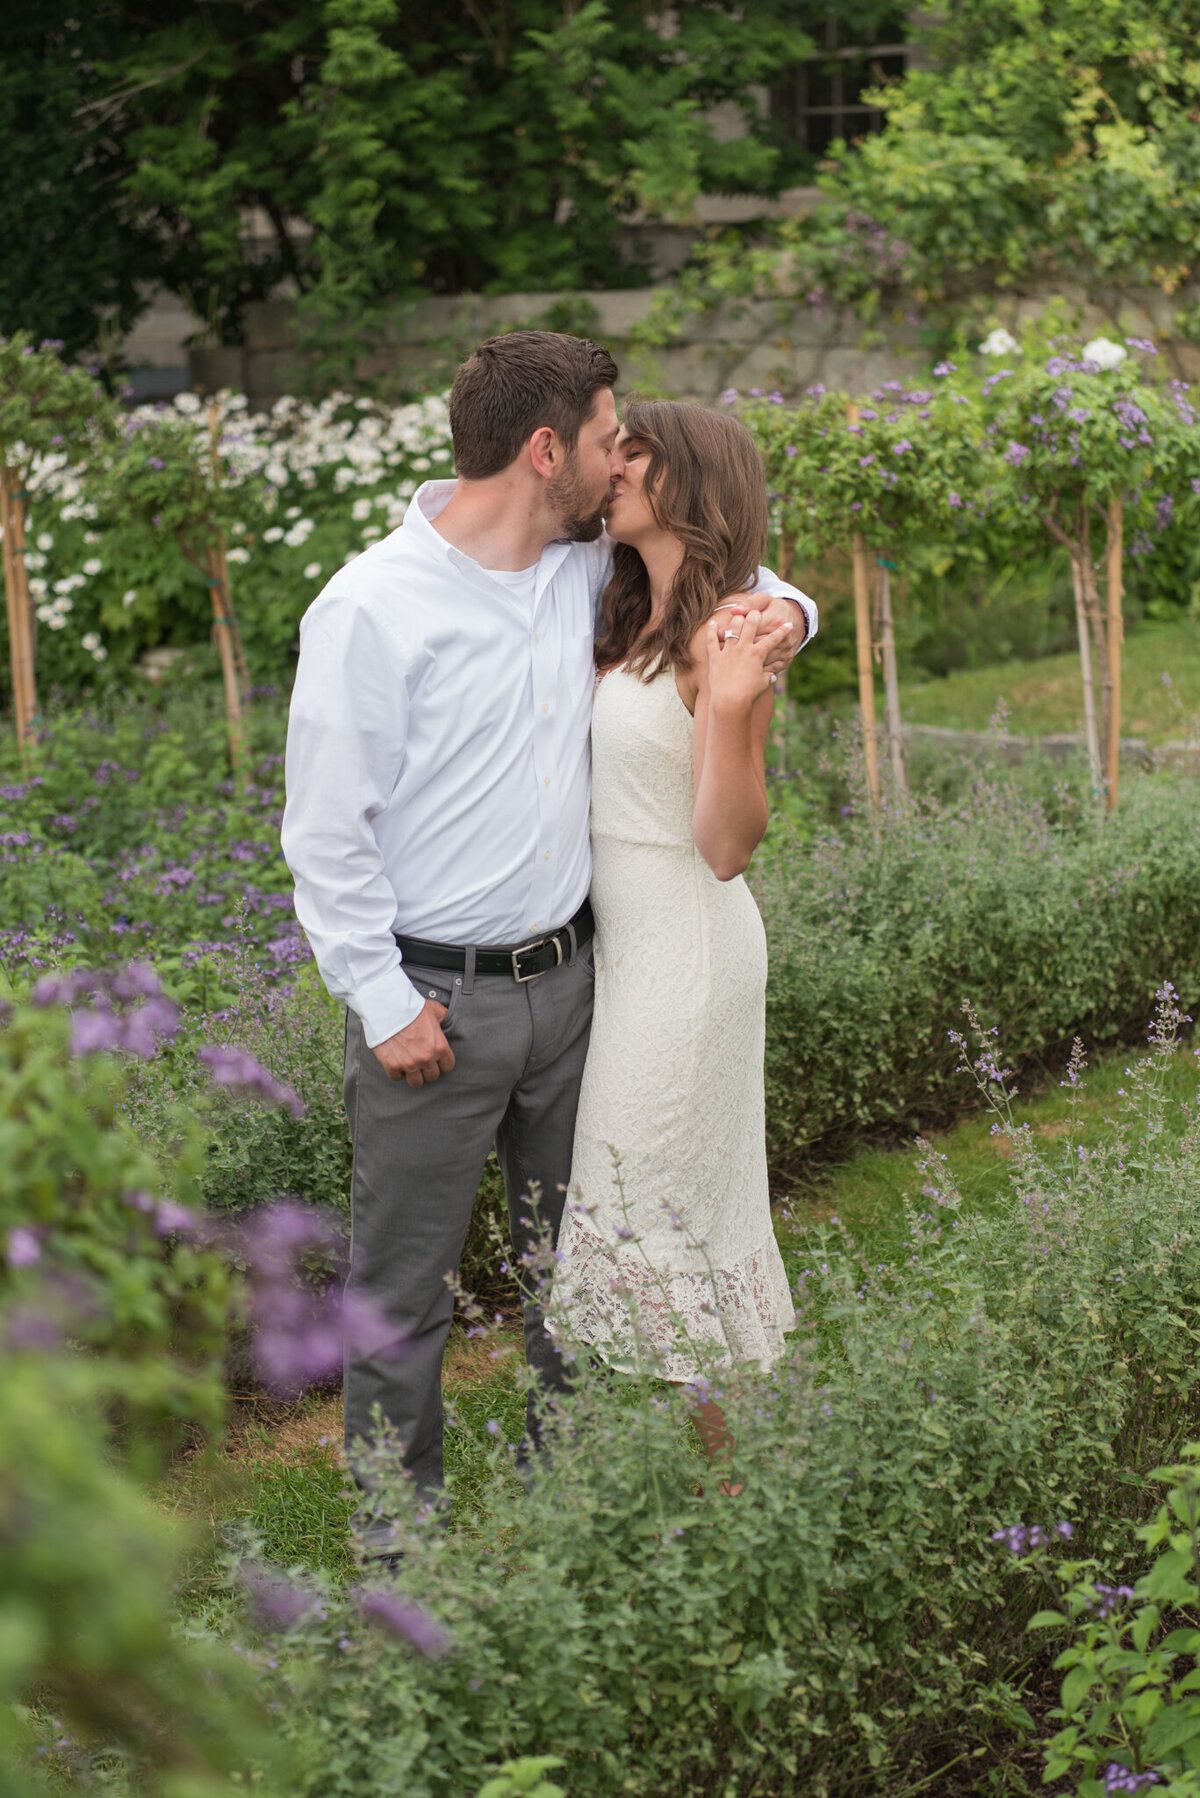 Couple kissing in green garden